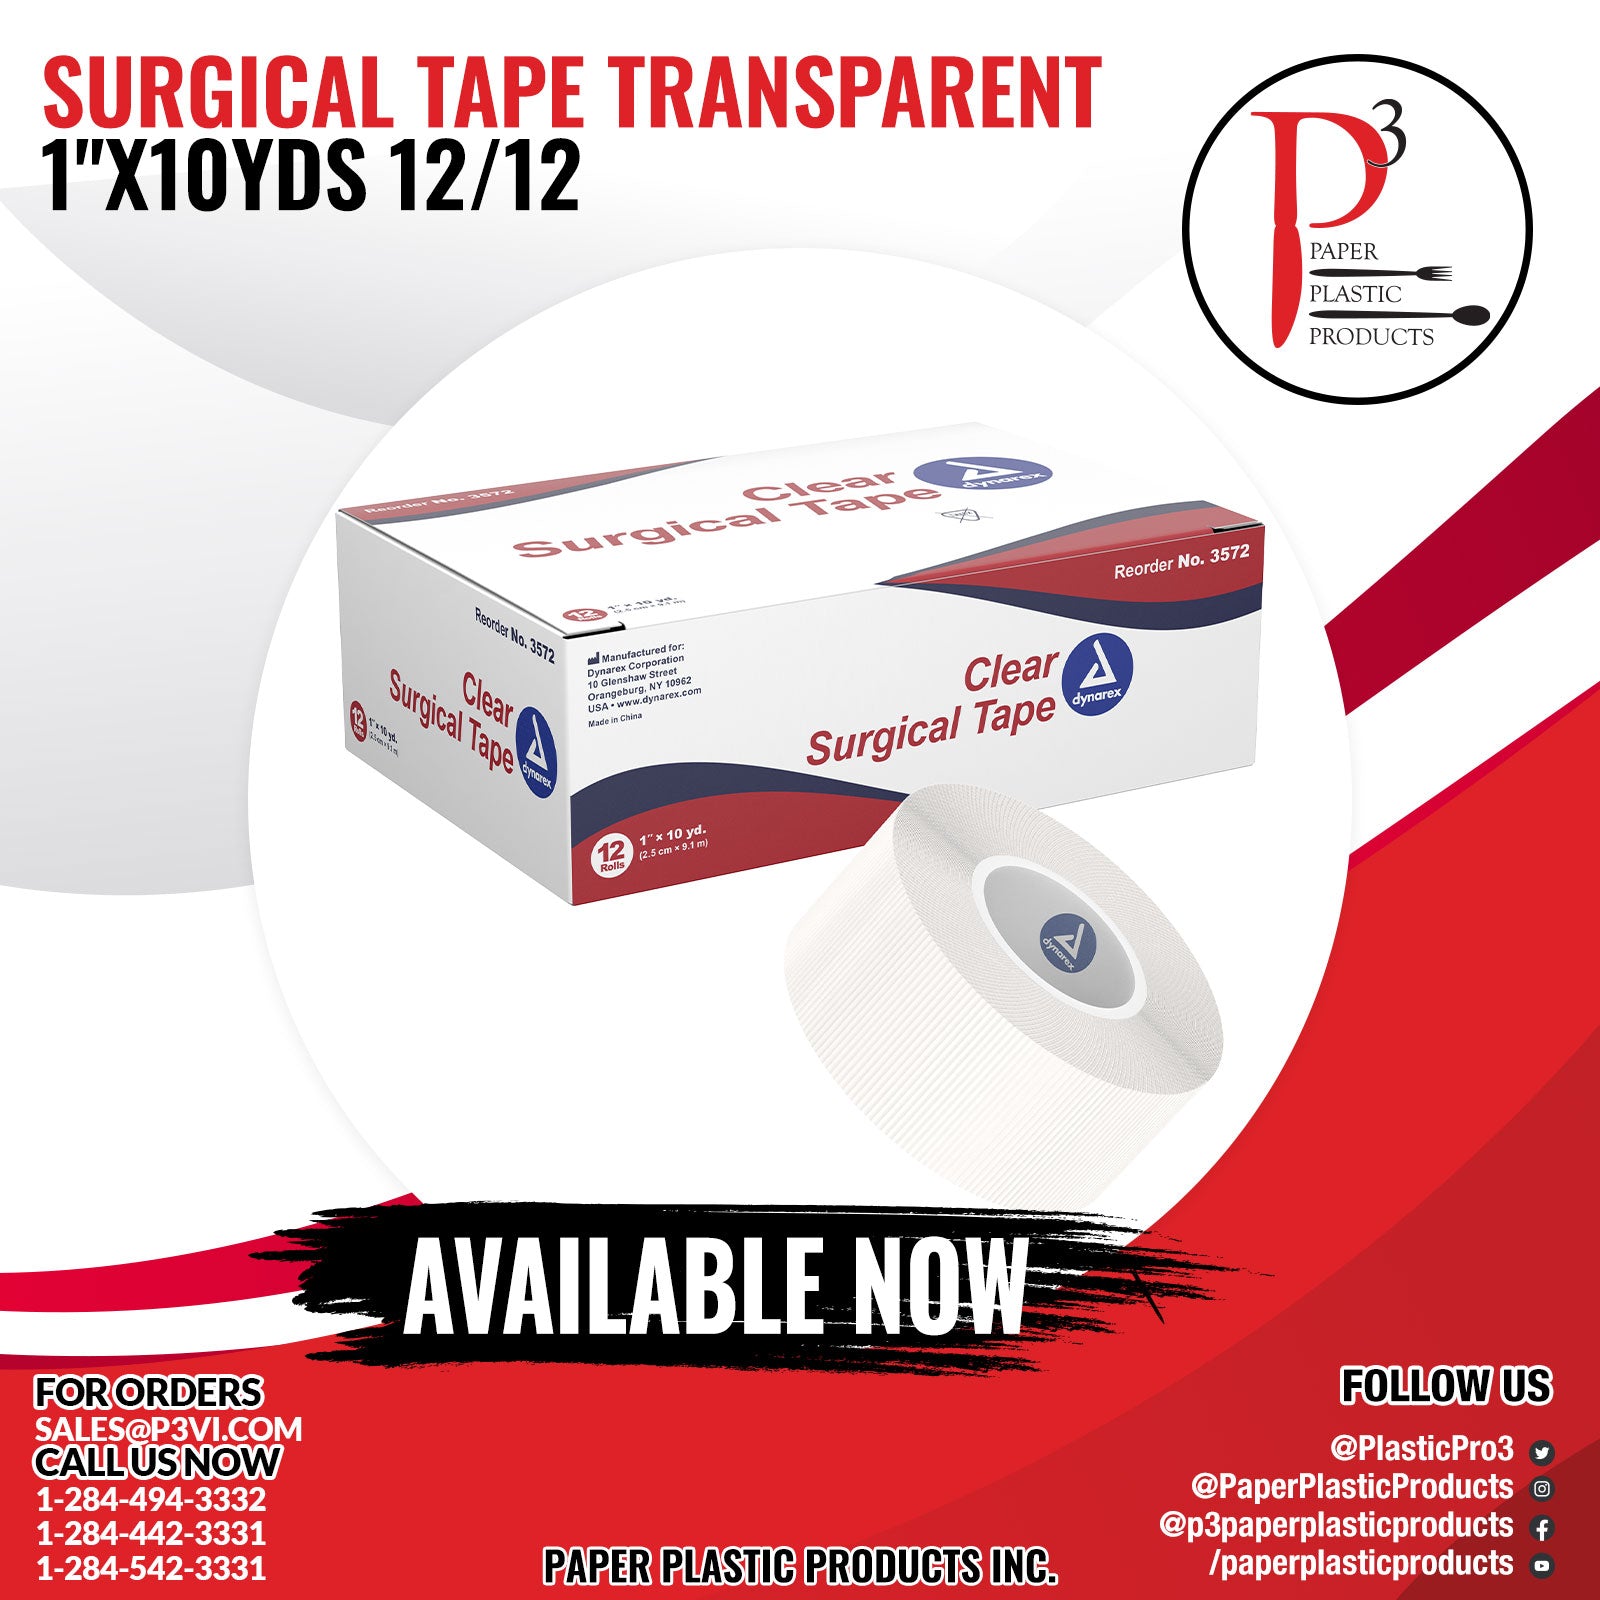 Surgical Tape Transparent 1"x10yds 12/12